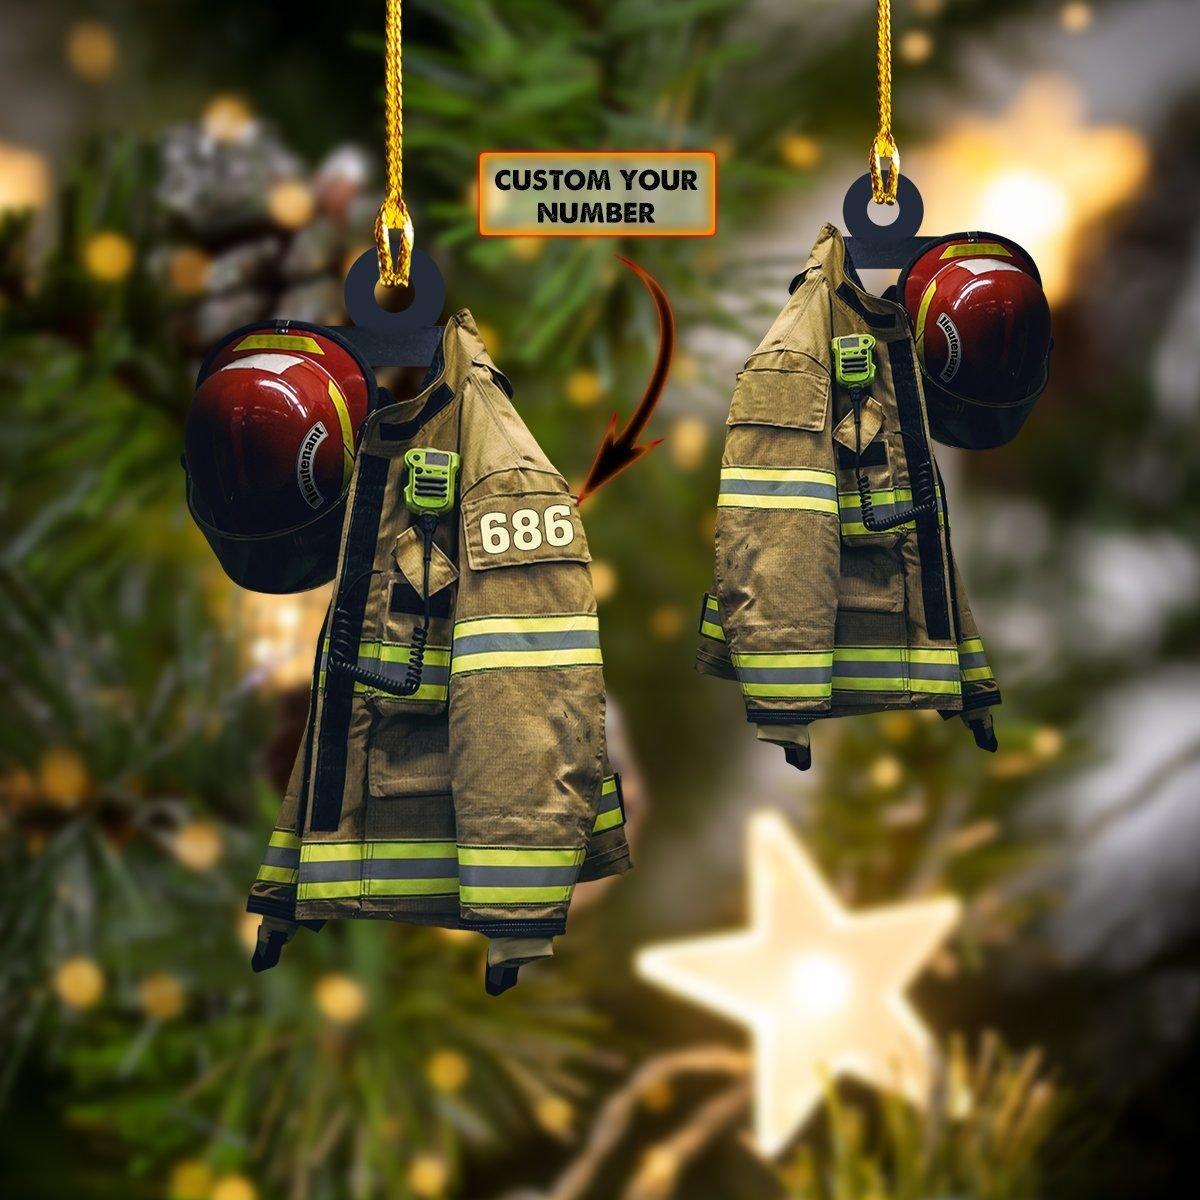 giftngon - Personalized Firefighter Lieutenant RED HELMET | Christmas Custom Shaped Ornament | Custom Number